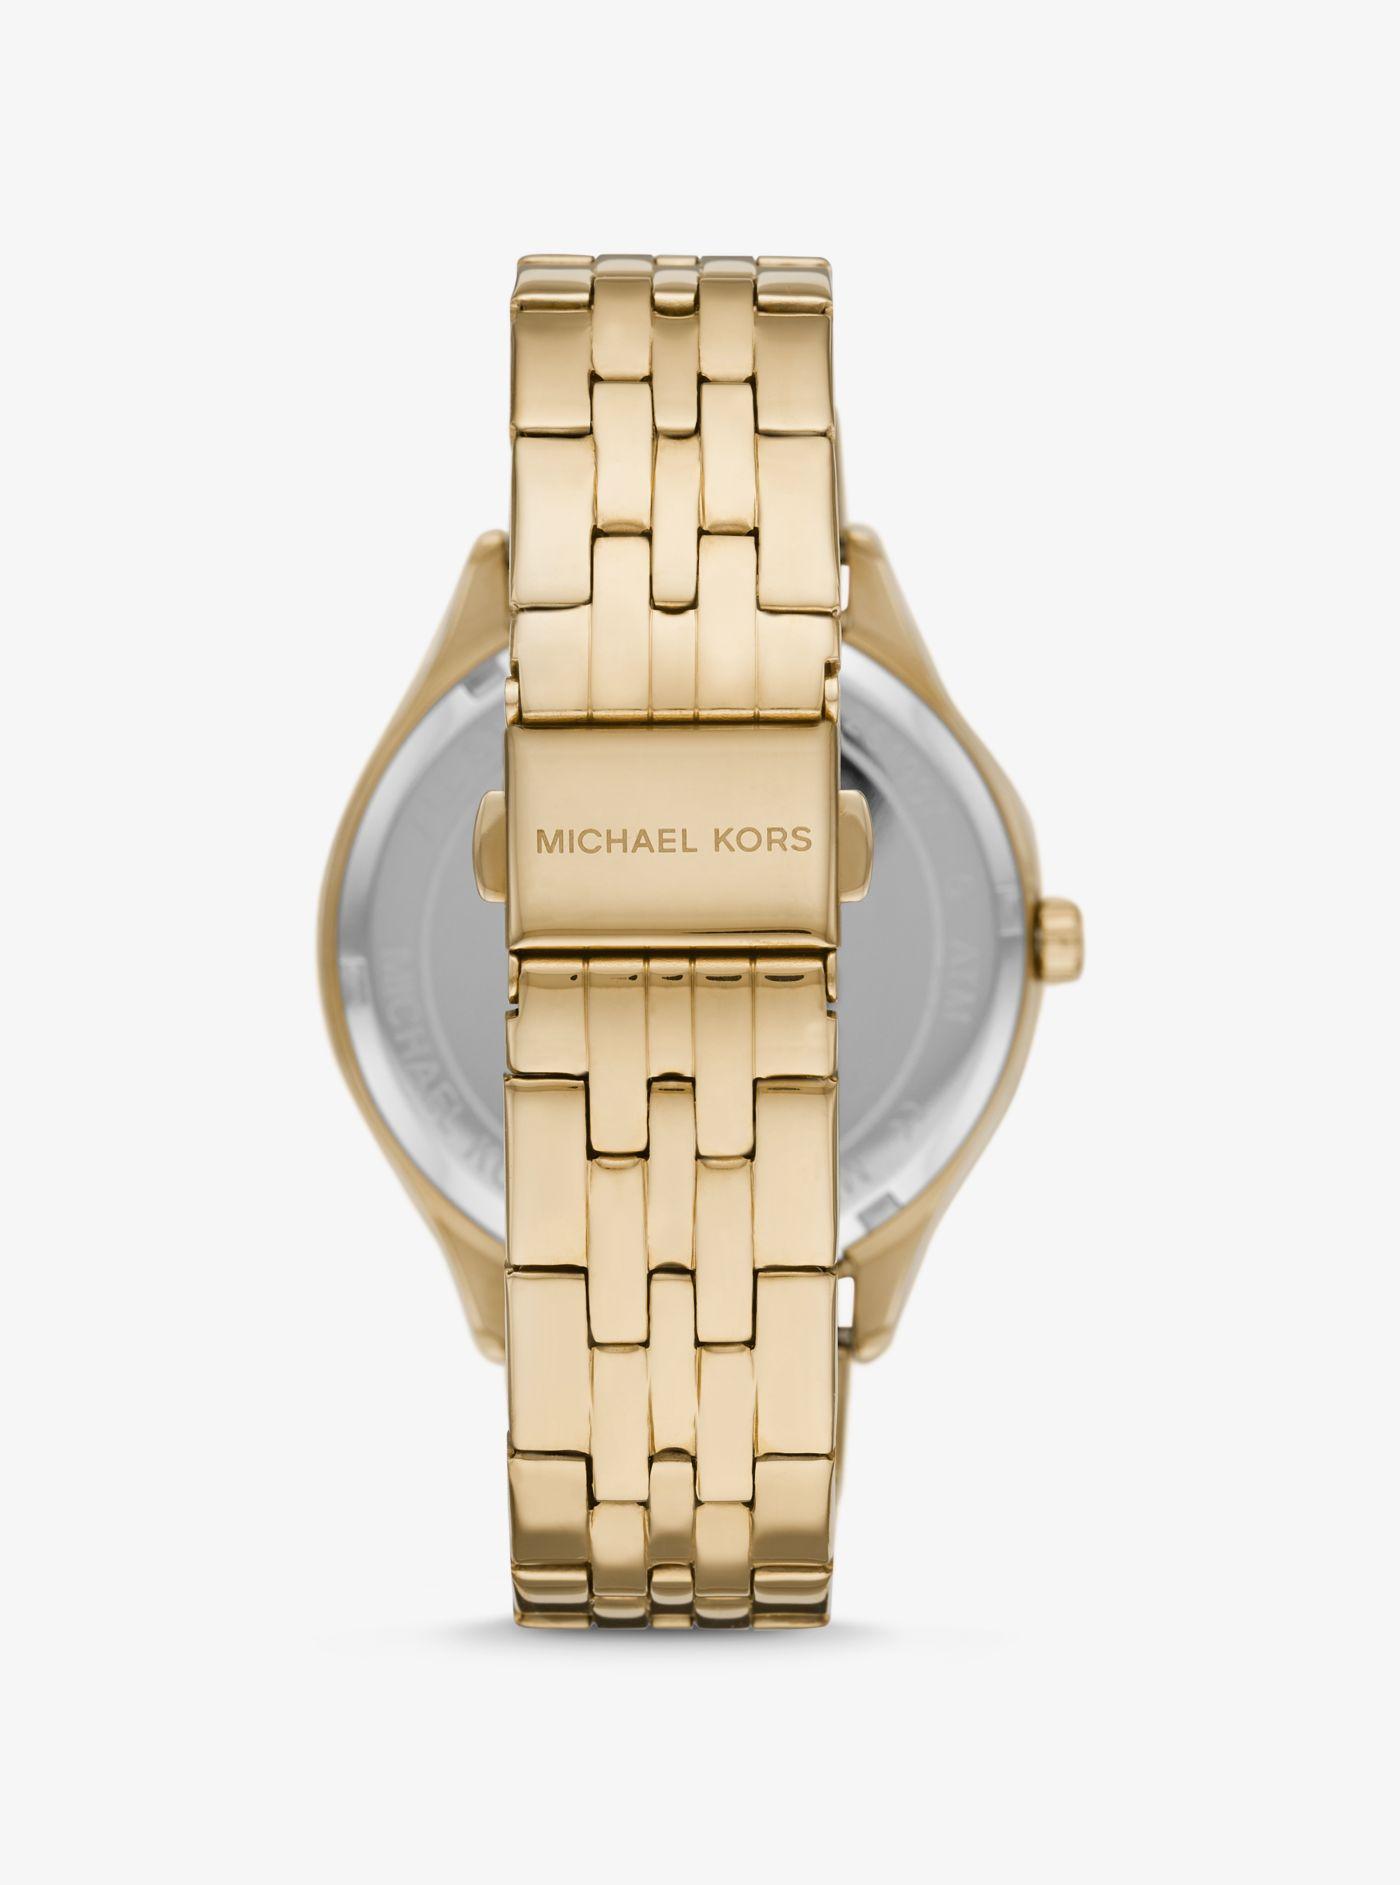 Gepard narre Kommerciel Michael Kors Oversized Benning Gold-tone Watch in Metallic - Lyst